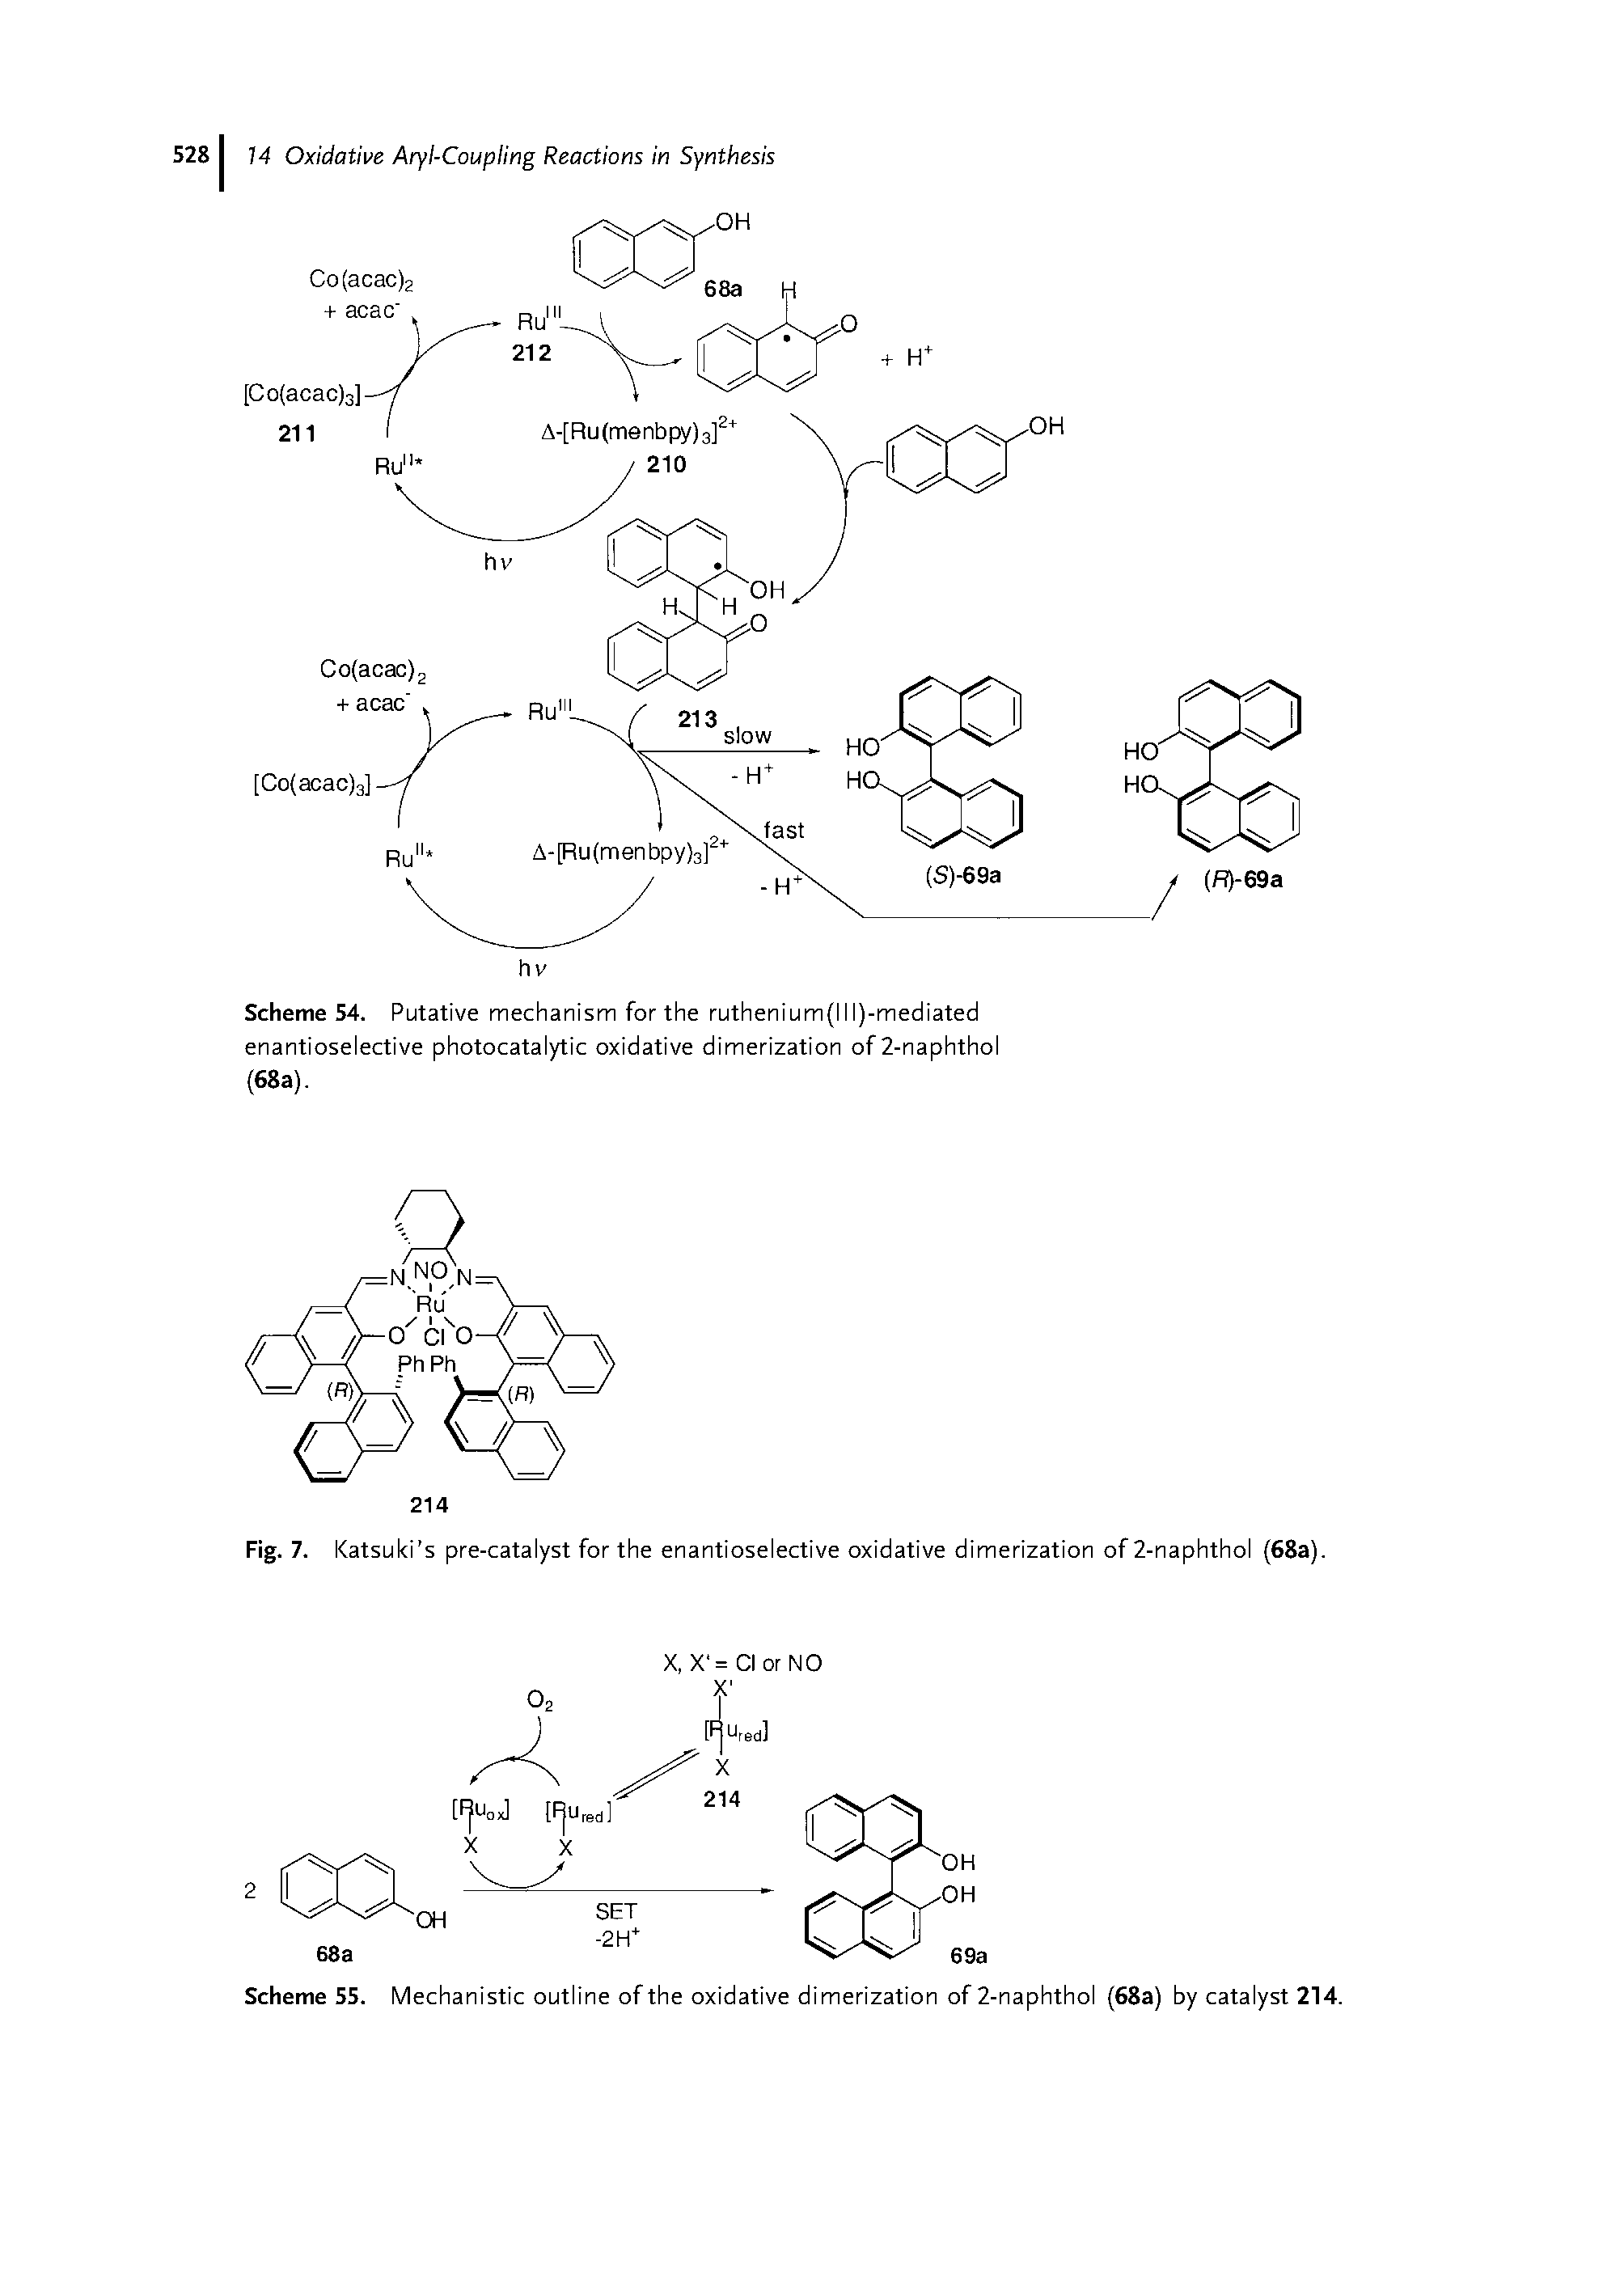 Scheme 54. Putative mechanism for the ruthenium(l I l)-mediated enantioselective photocatalytic oxidative dimerization of 2-naphthol (68a).